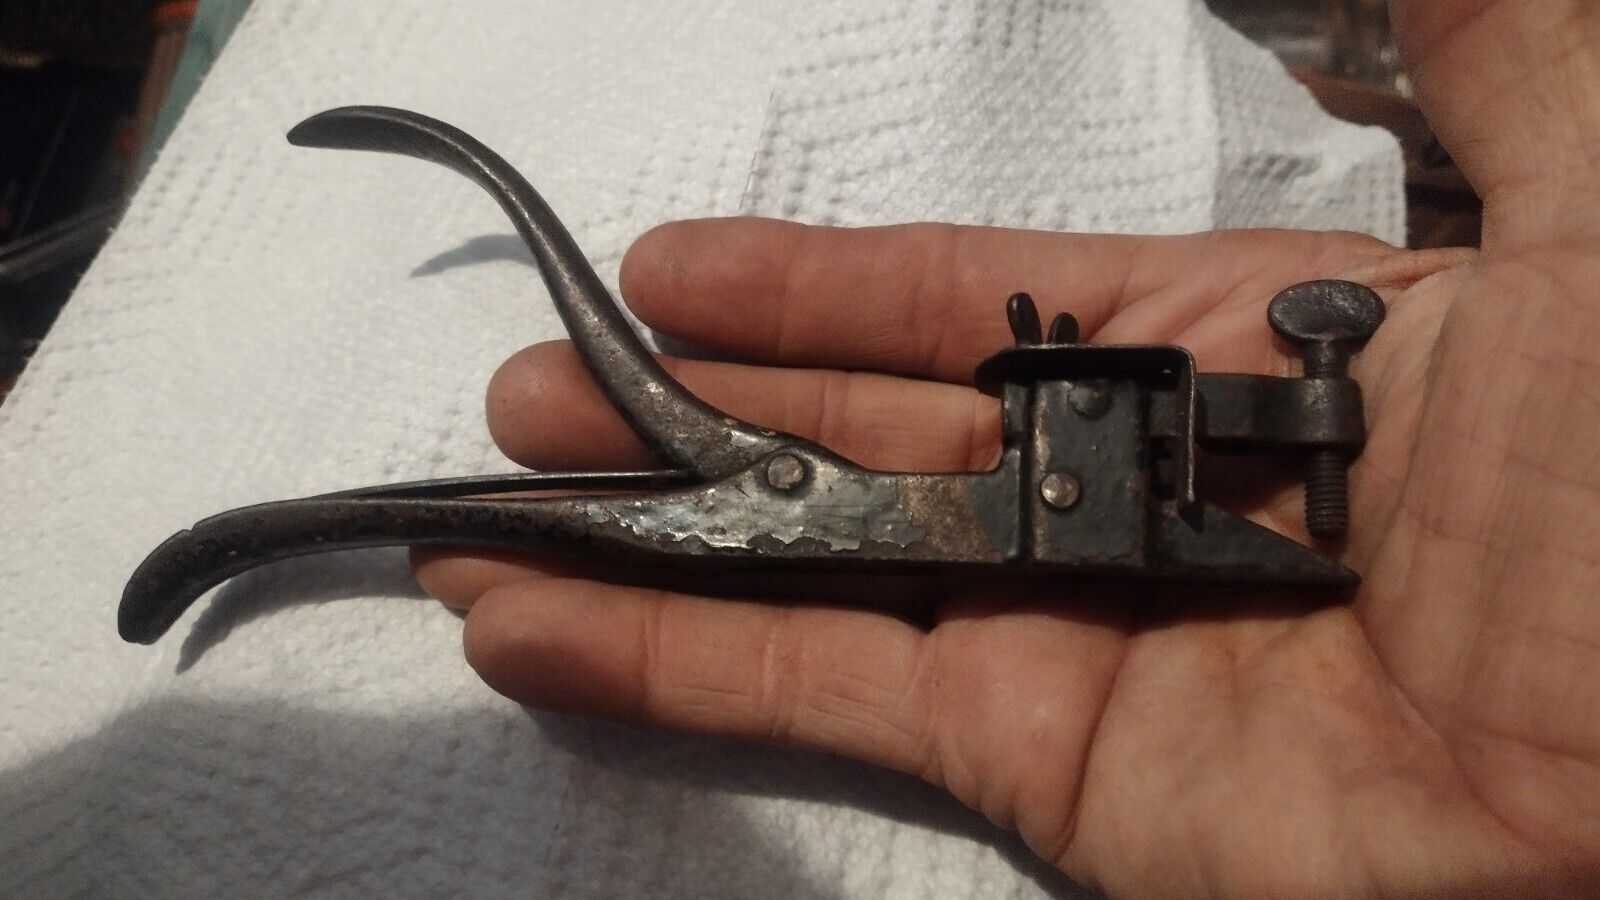 Antique Leach’s Saw Set Tool Pat’d Jan 19, 1869 gift shop 